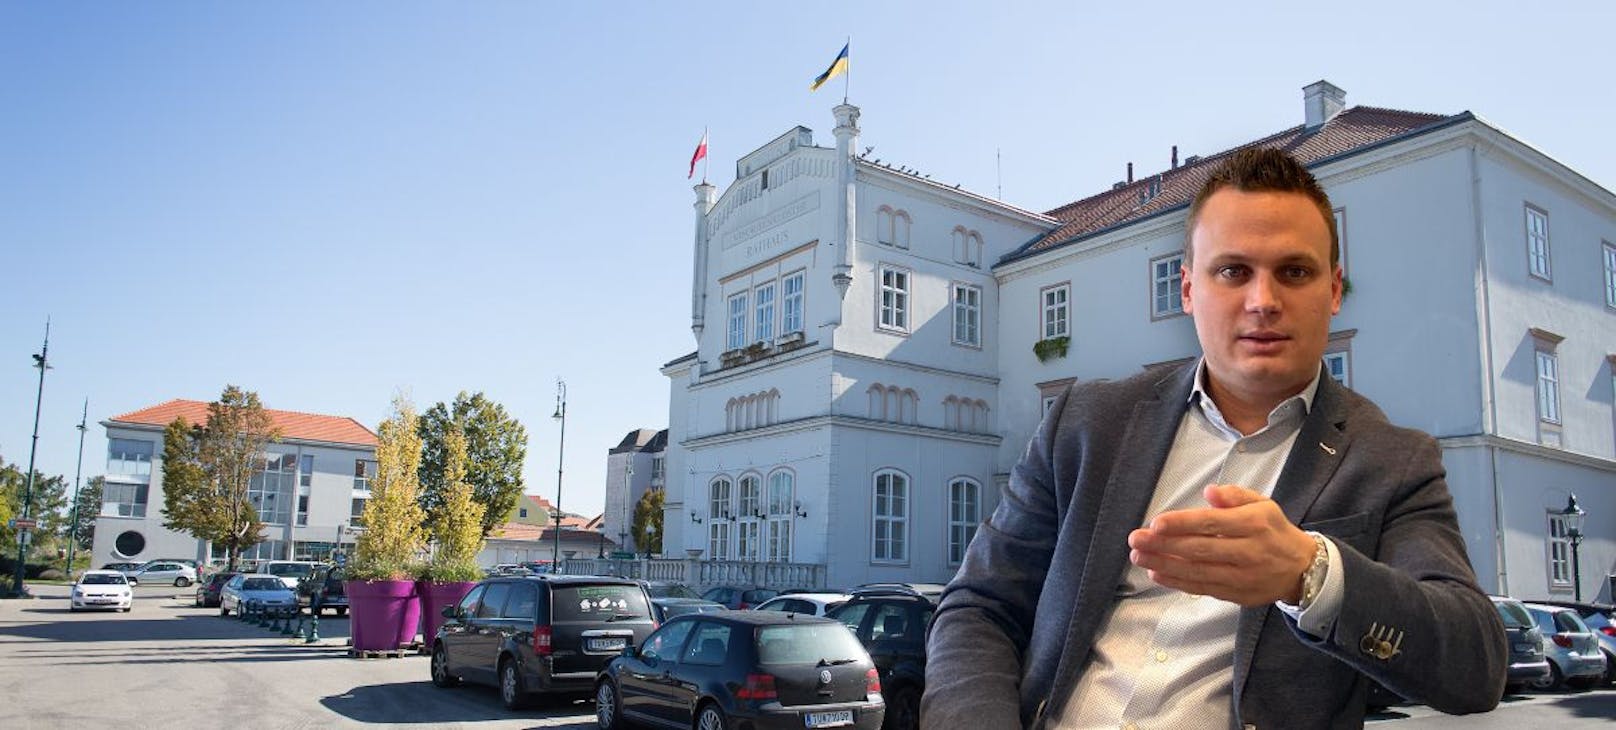 Andreas Bors kritisiert "Ahnungslosigkeit im Tullner Rathaus".